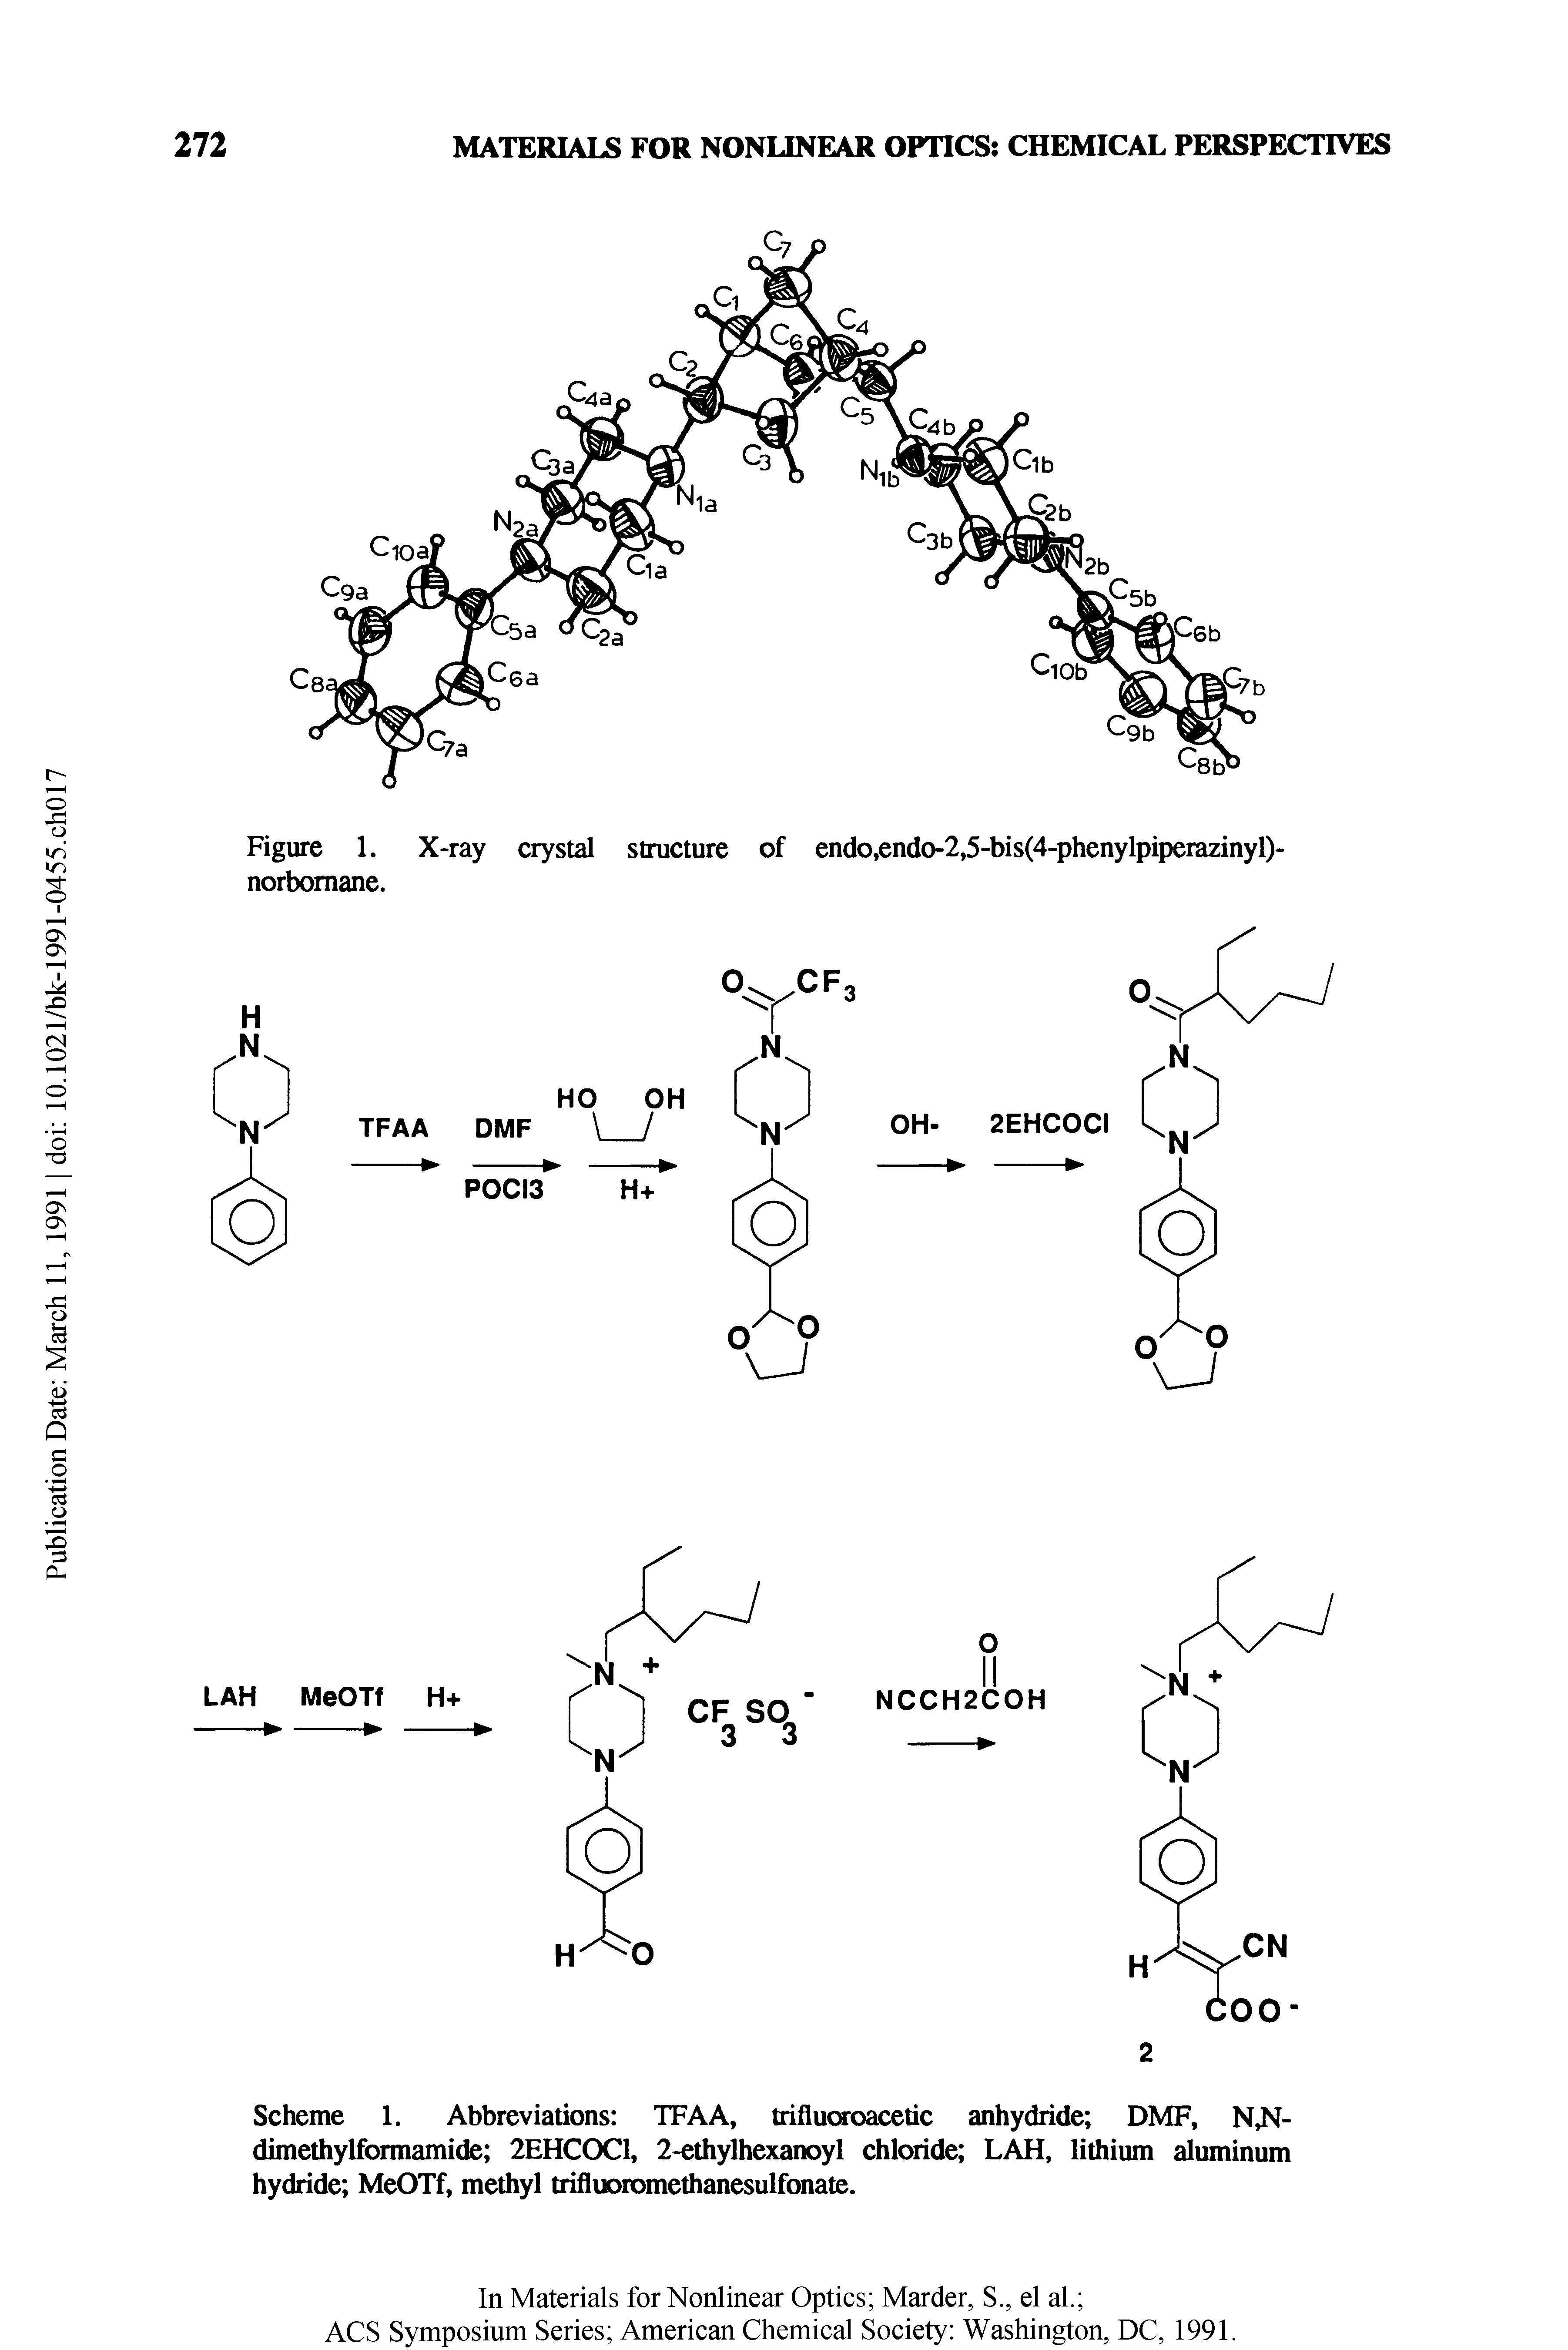 Scheme 1. Abbreviations TFAA, trifluoroacetic anhydride DMF, N,N-dimethylformamide 2EHCOC1, 2-ethylhexanoyl chloride LAH, lithium aluminum hydride MeOTf, methyl trifluoromethanesulfonate.